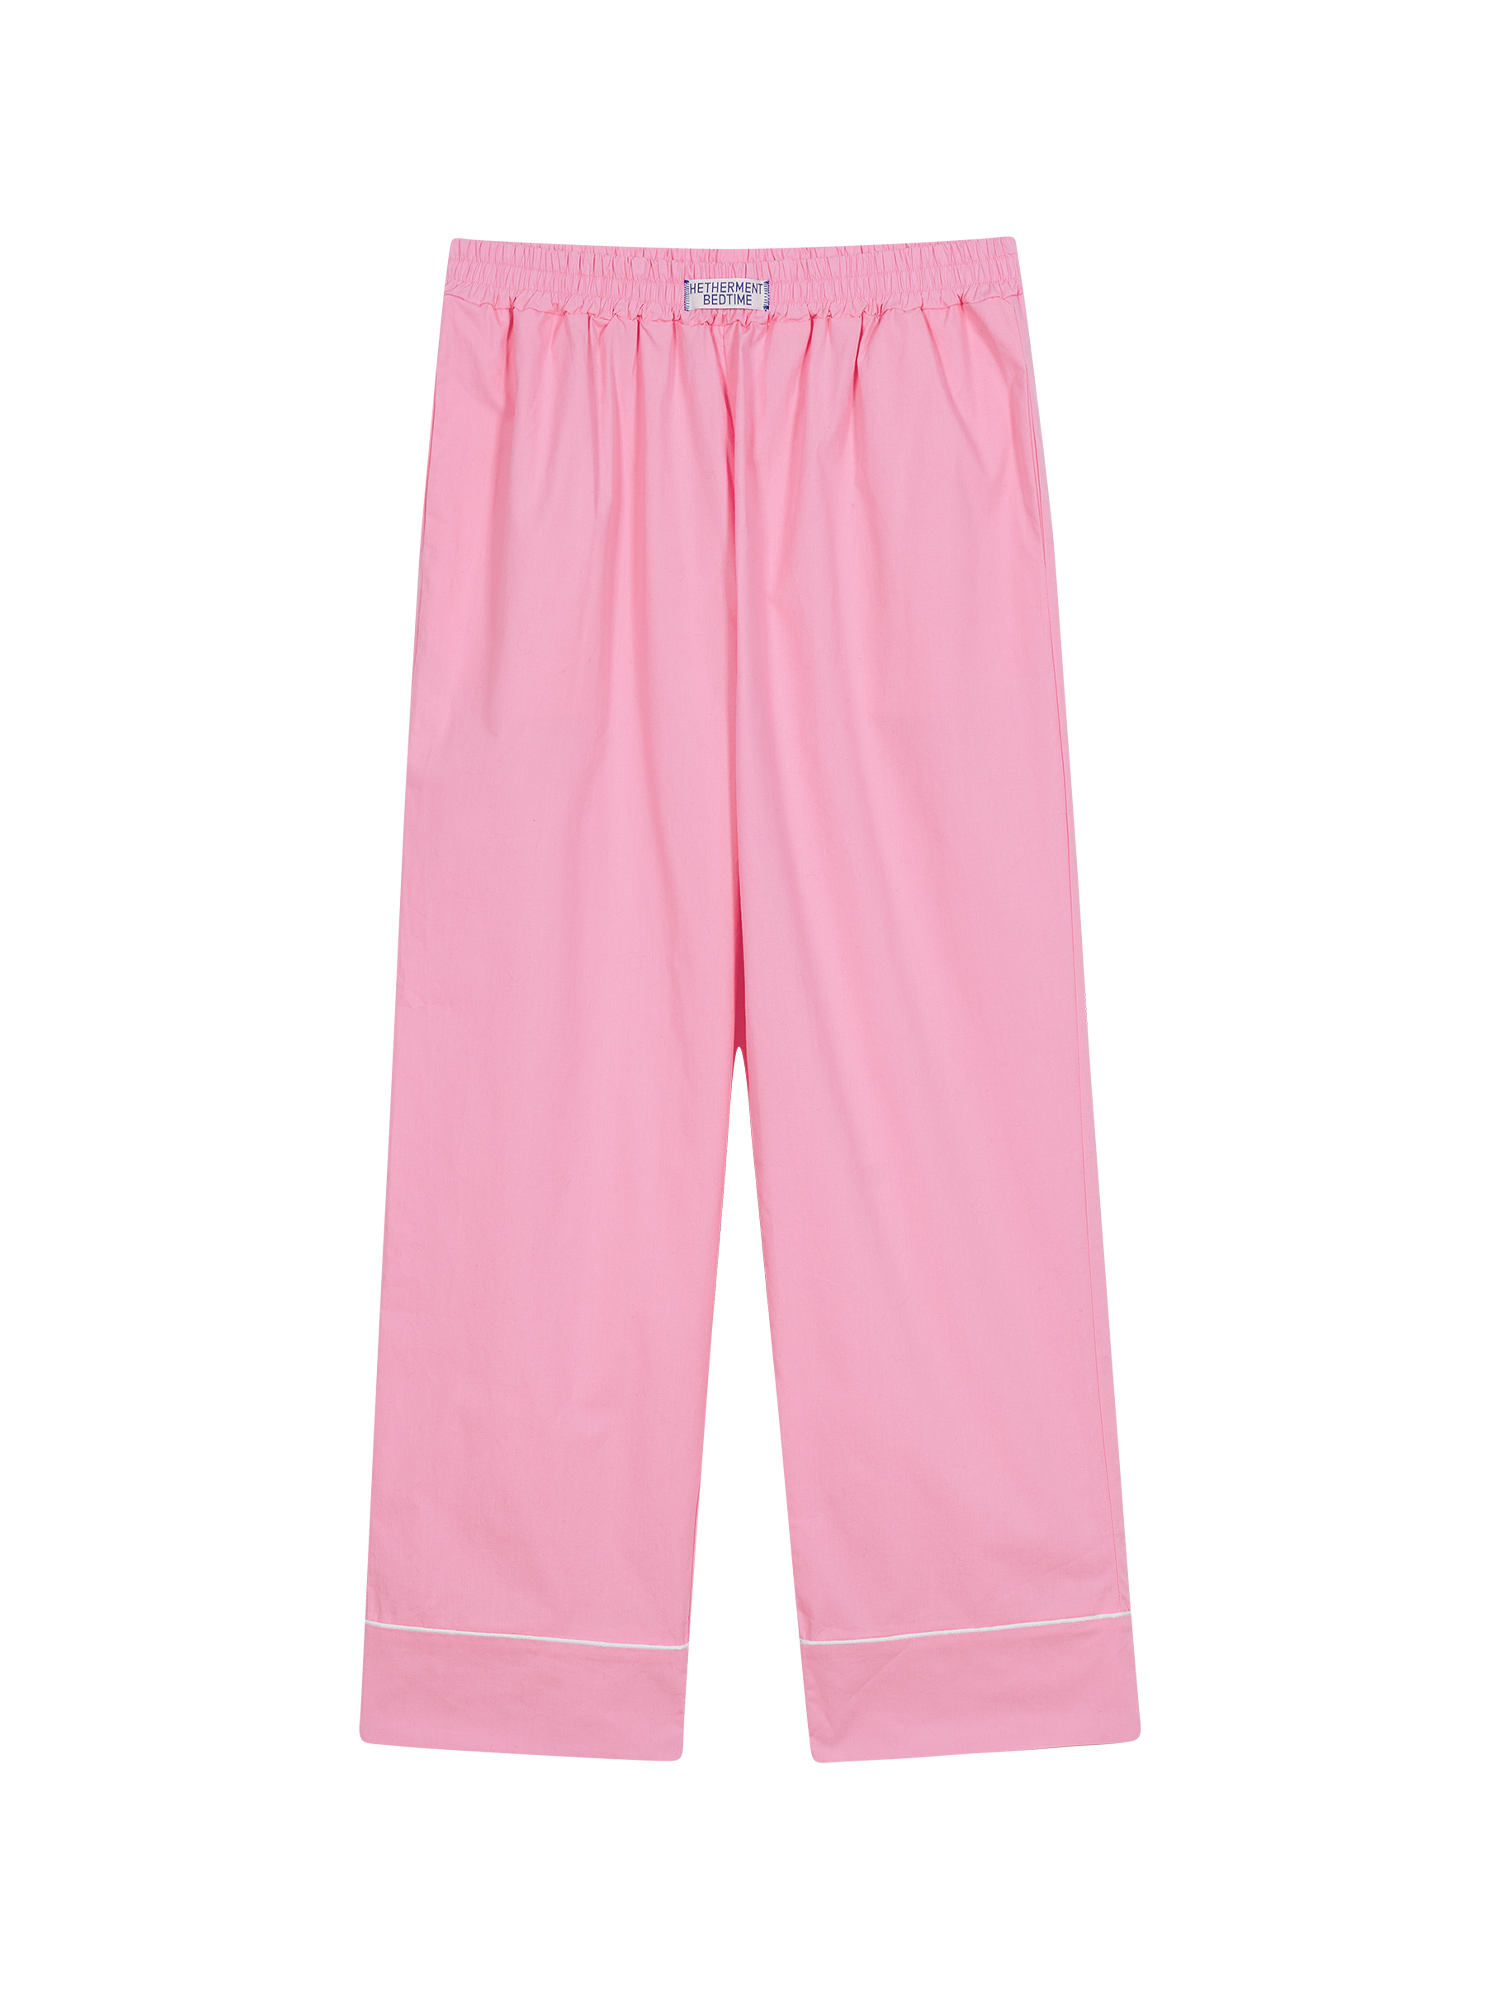 Bedtime Piping Pajama Pants -Pink